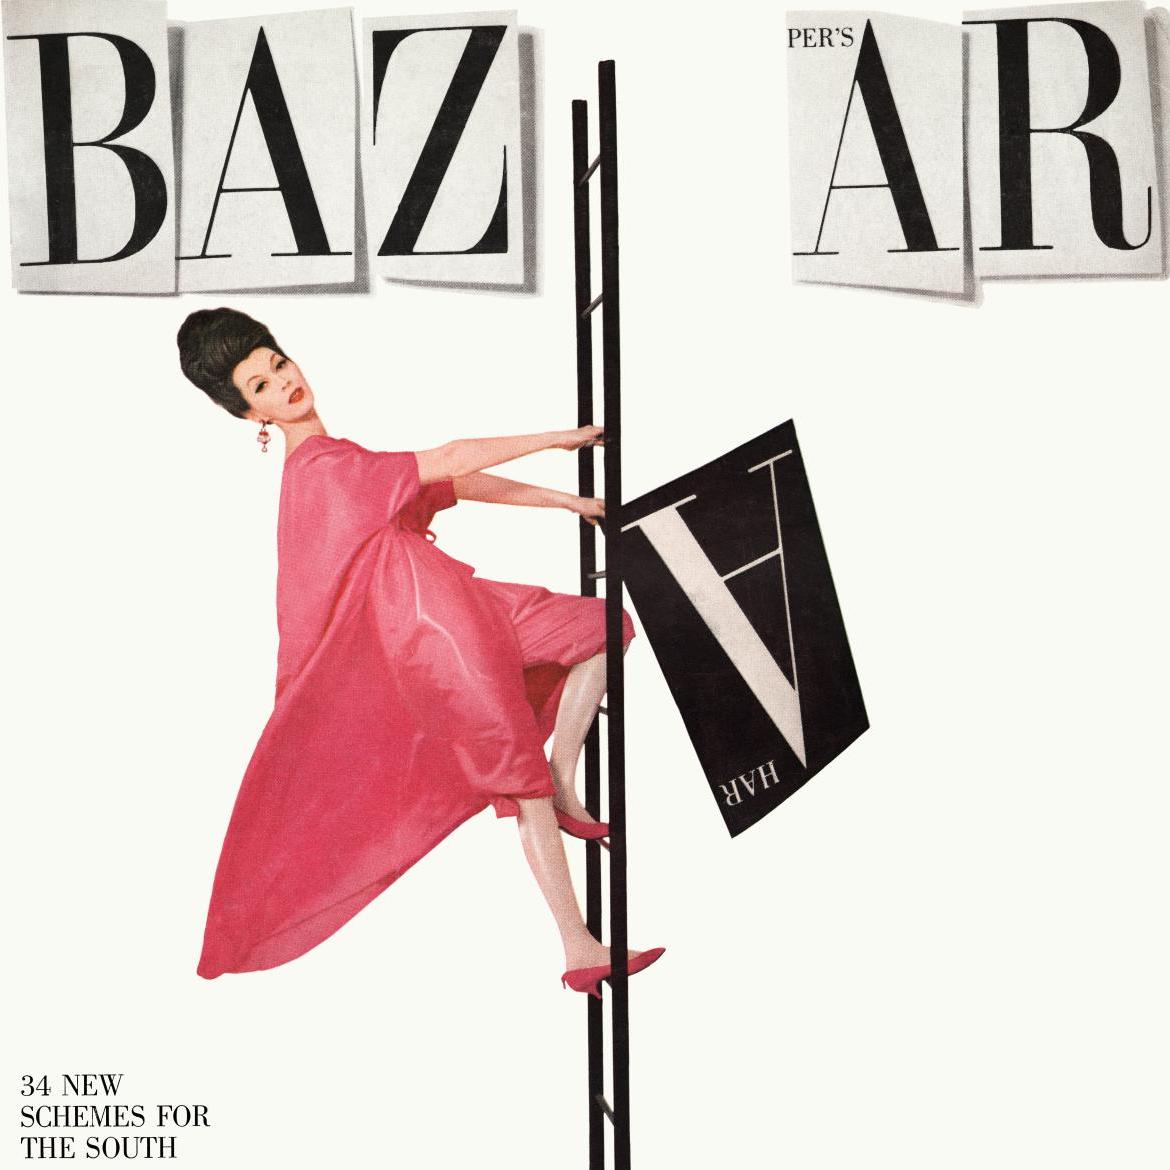 Harper’s Bazaar, premier magazine de mode au MAD - Expositions